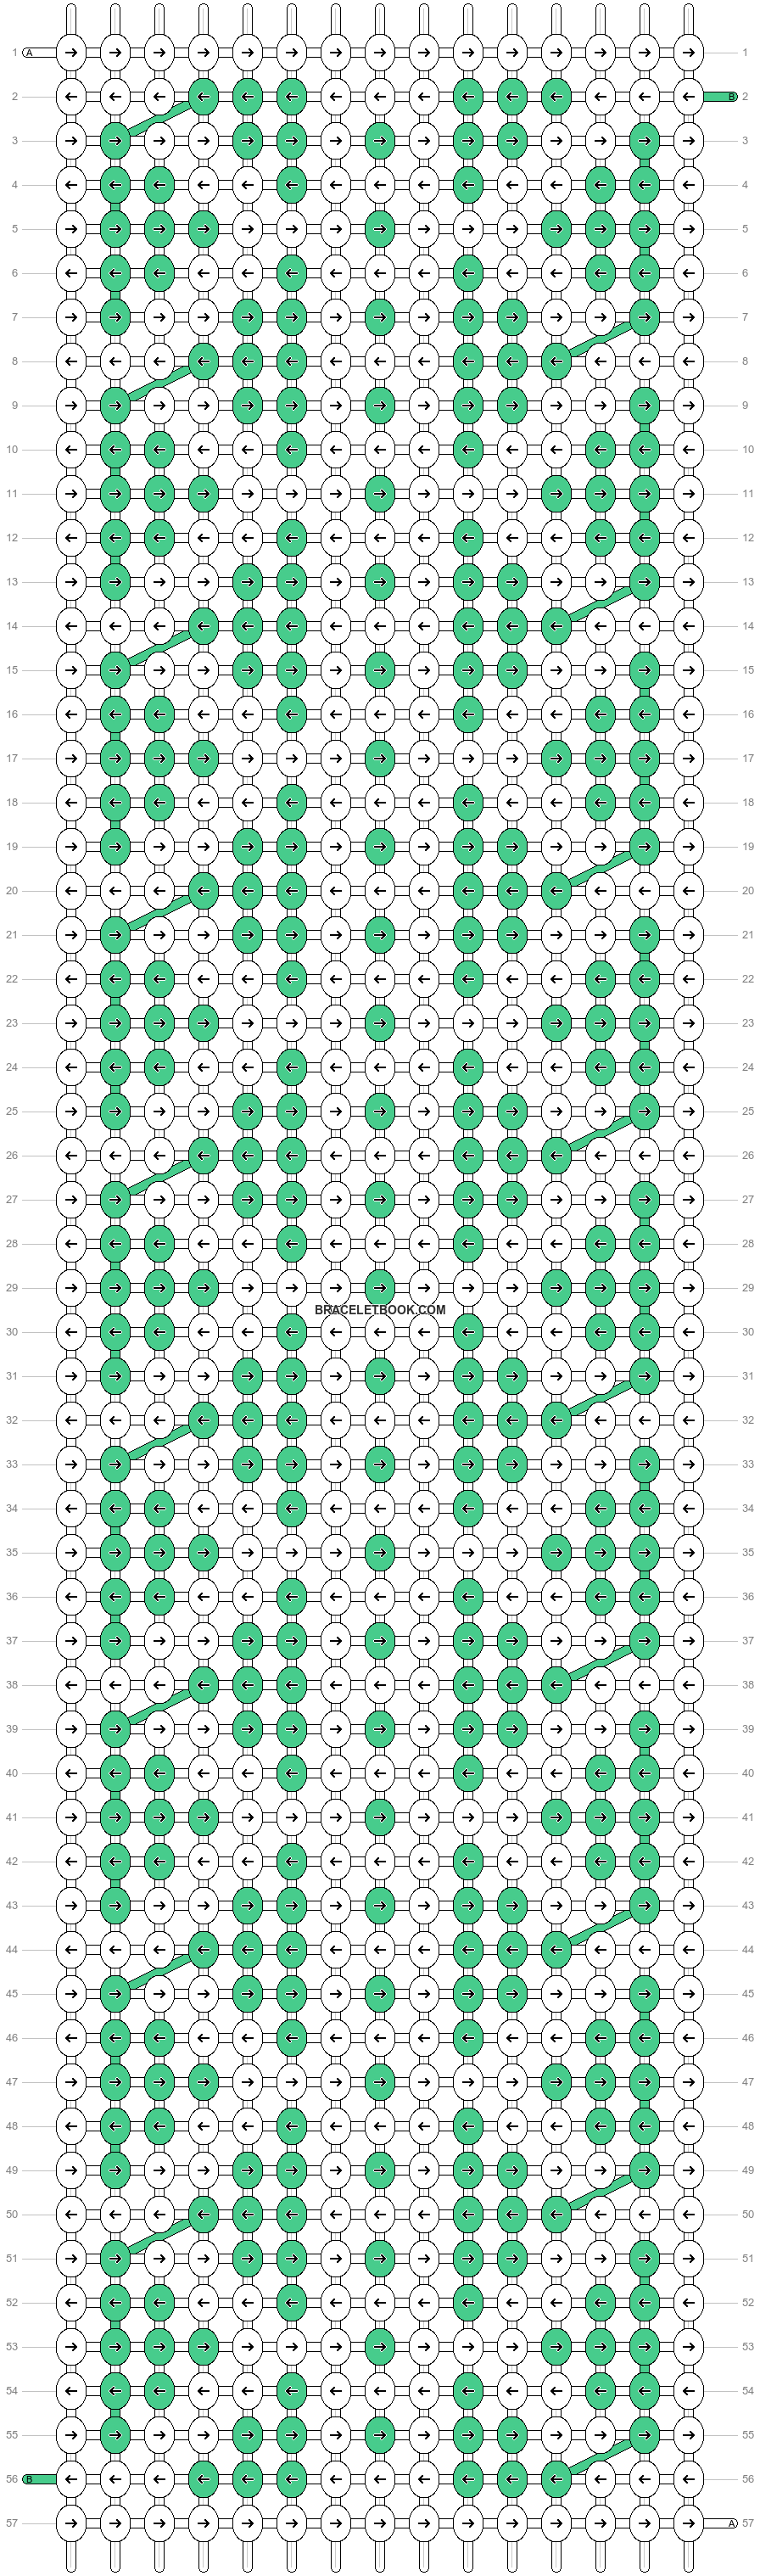 Alpha pattern #13845 pattern